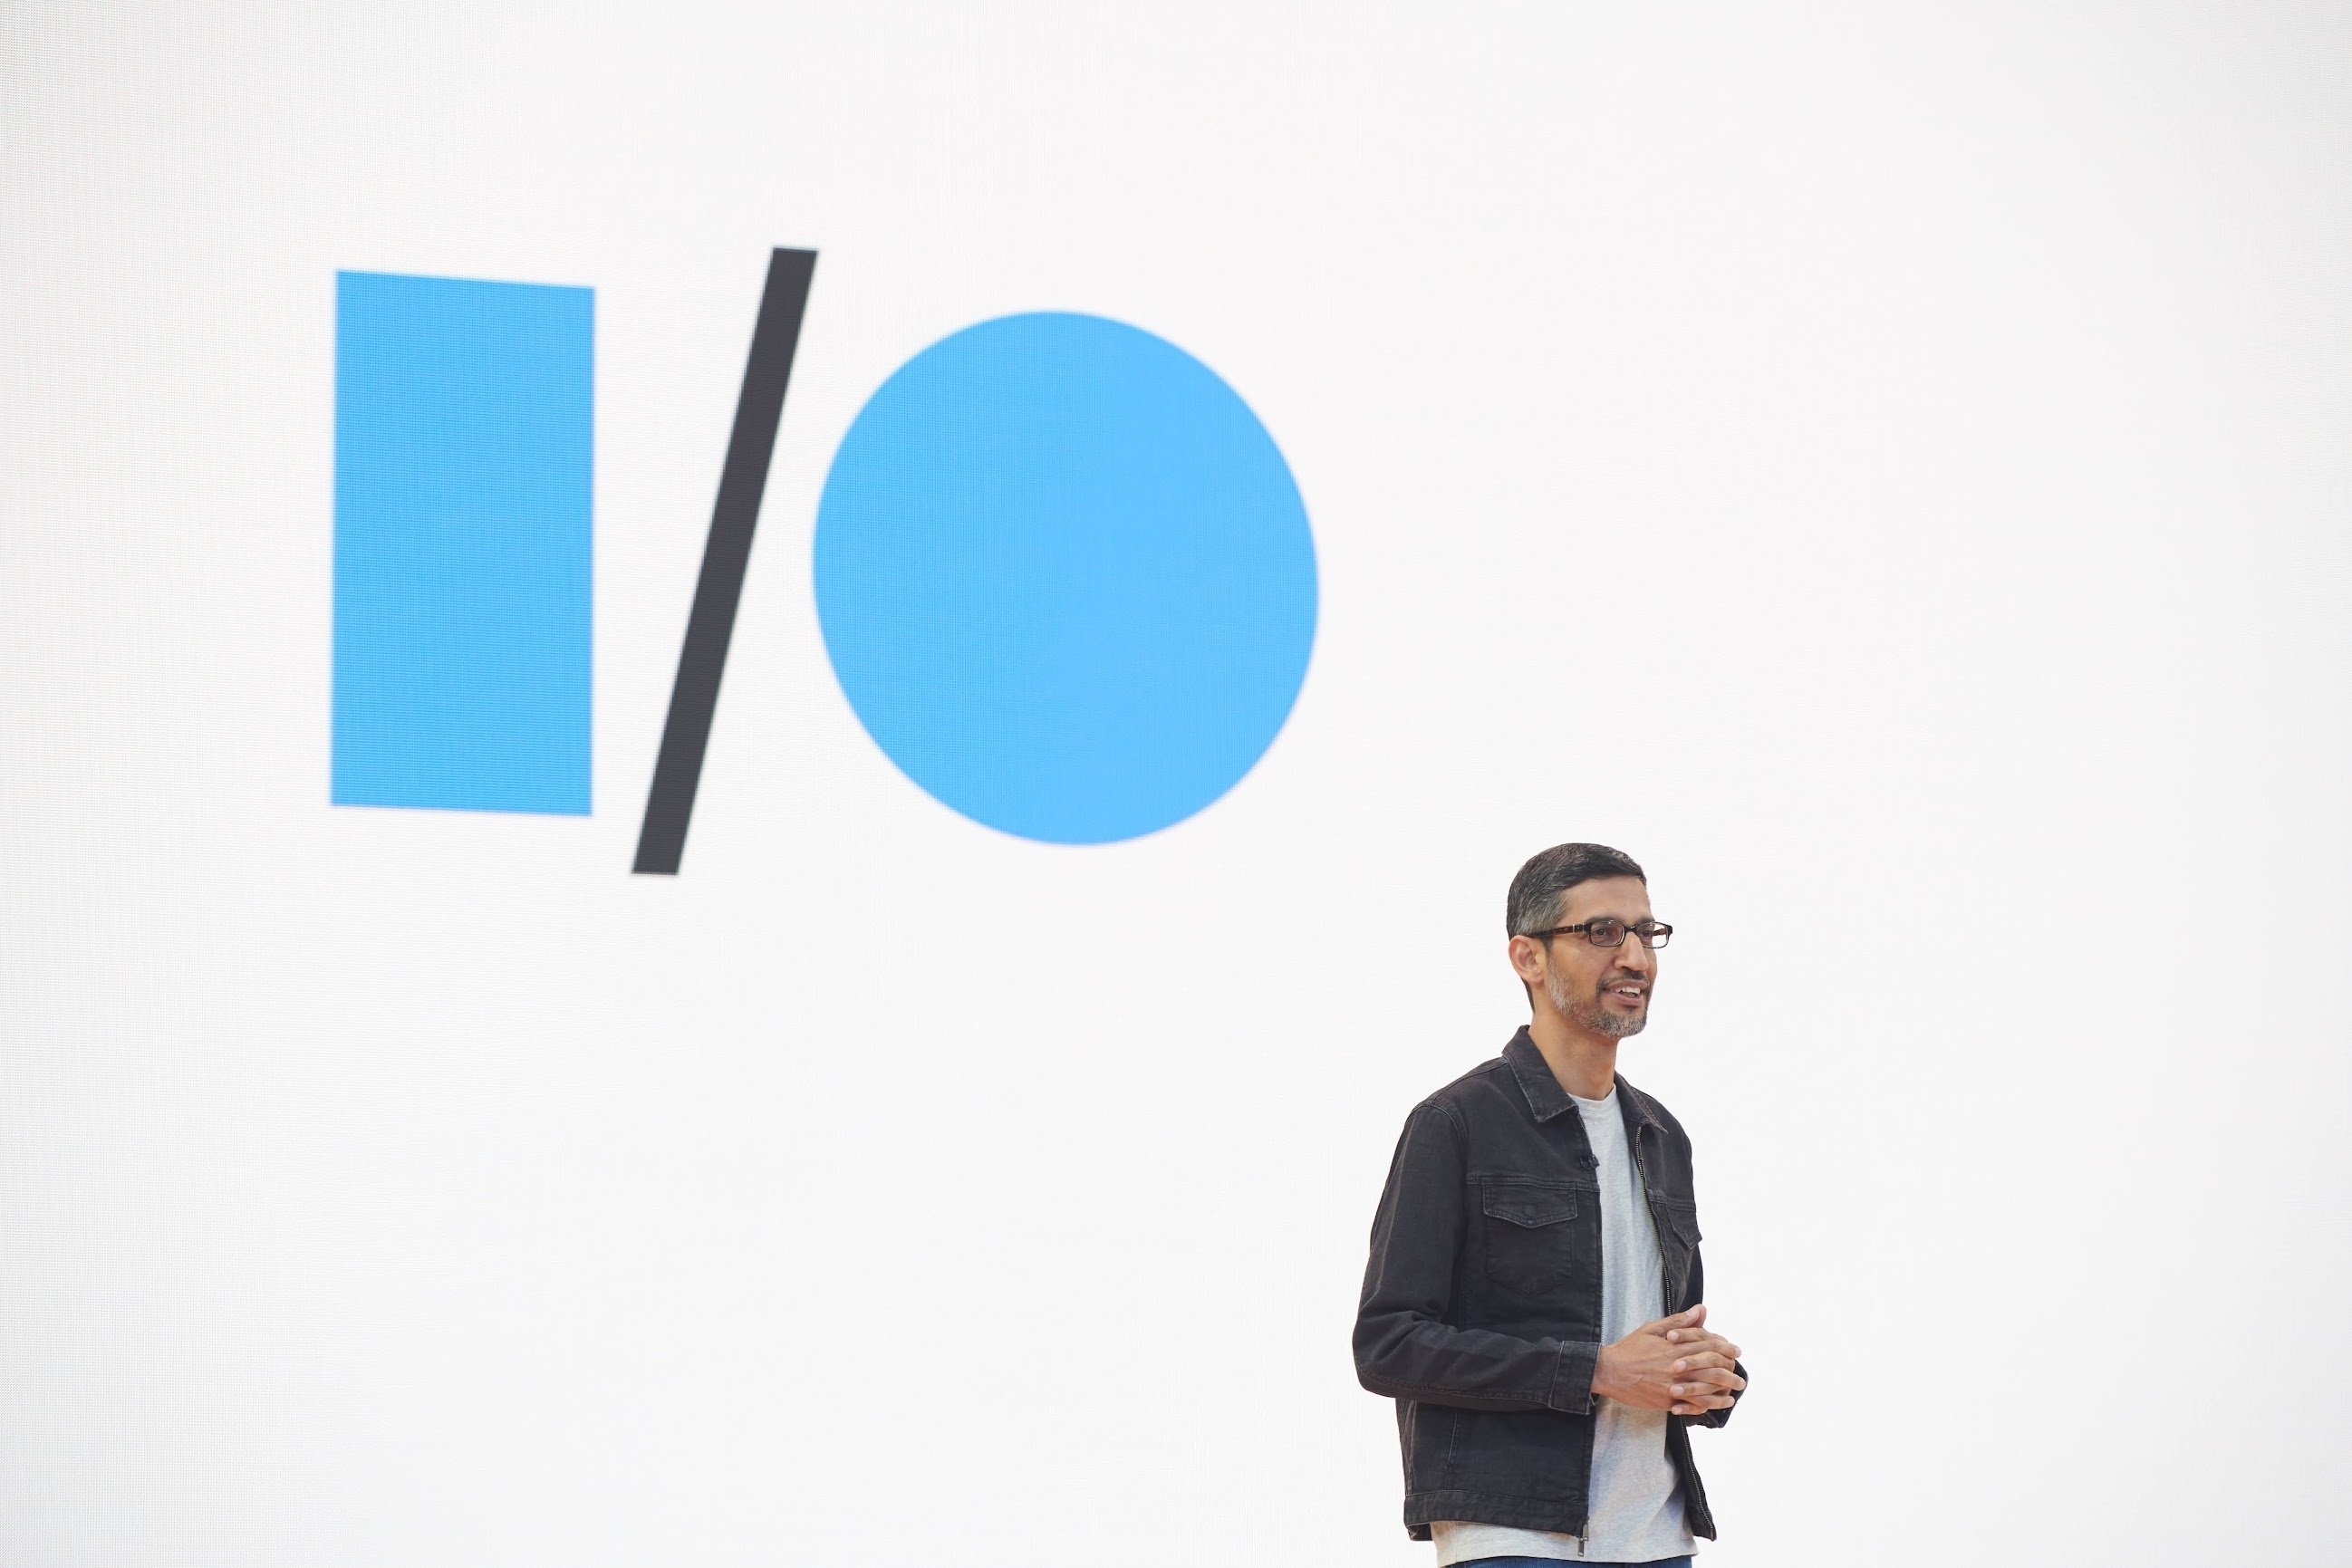 Google CEO Sundar Pichai at Google I/O 2022